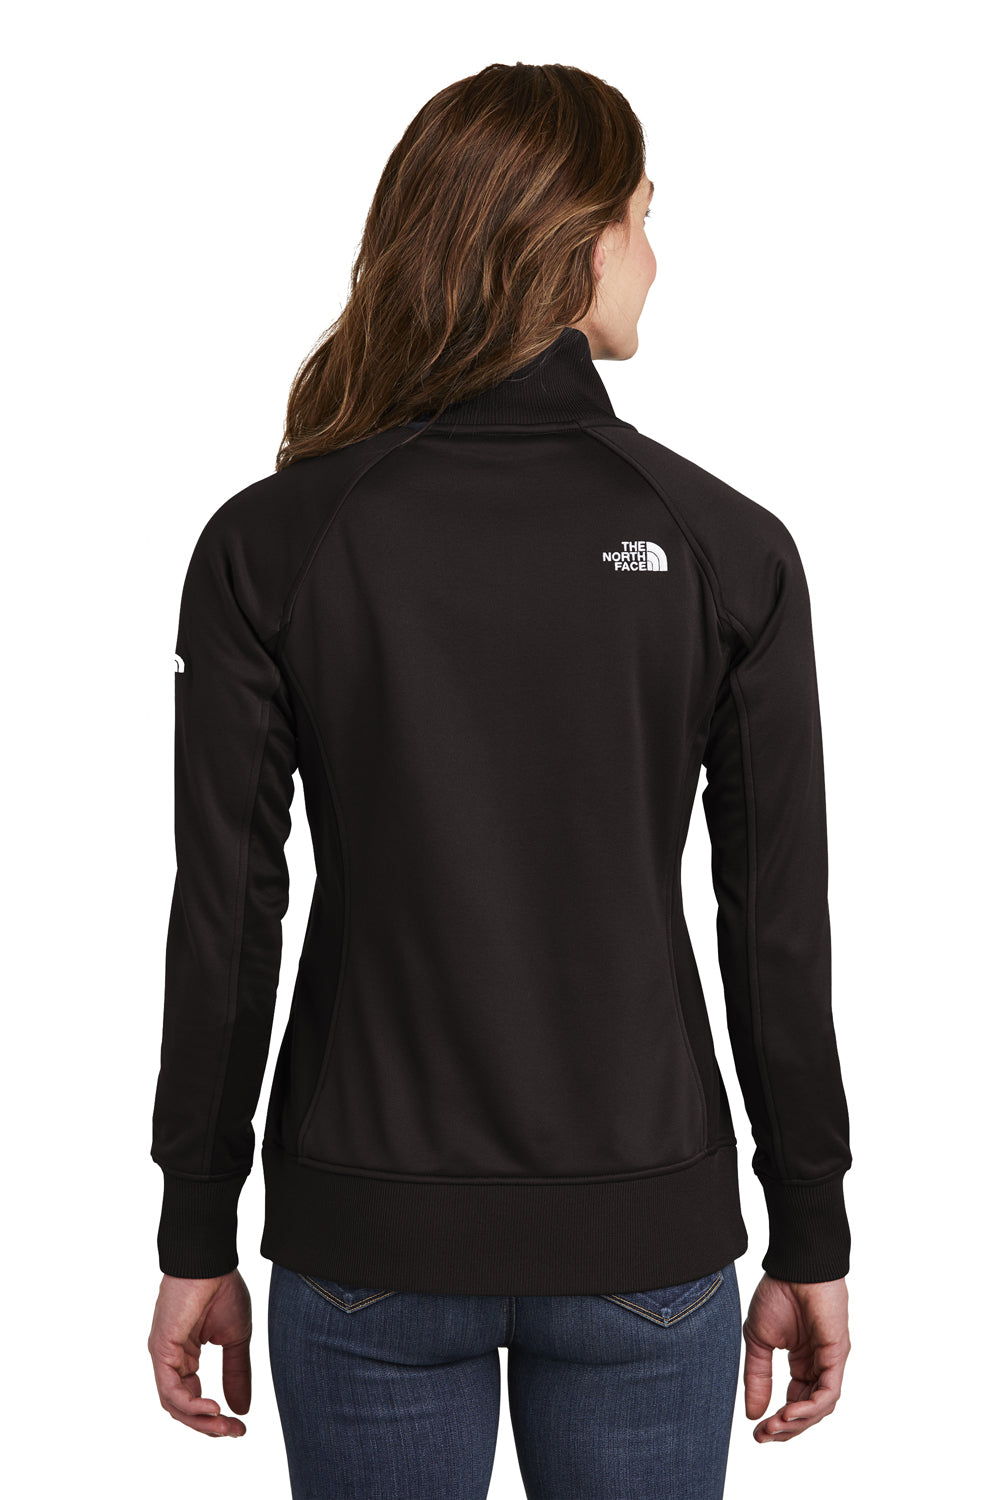 The North Face NF0A3SEV Womens Tech Full Zip Fleece Jacket Black Back